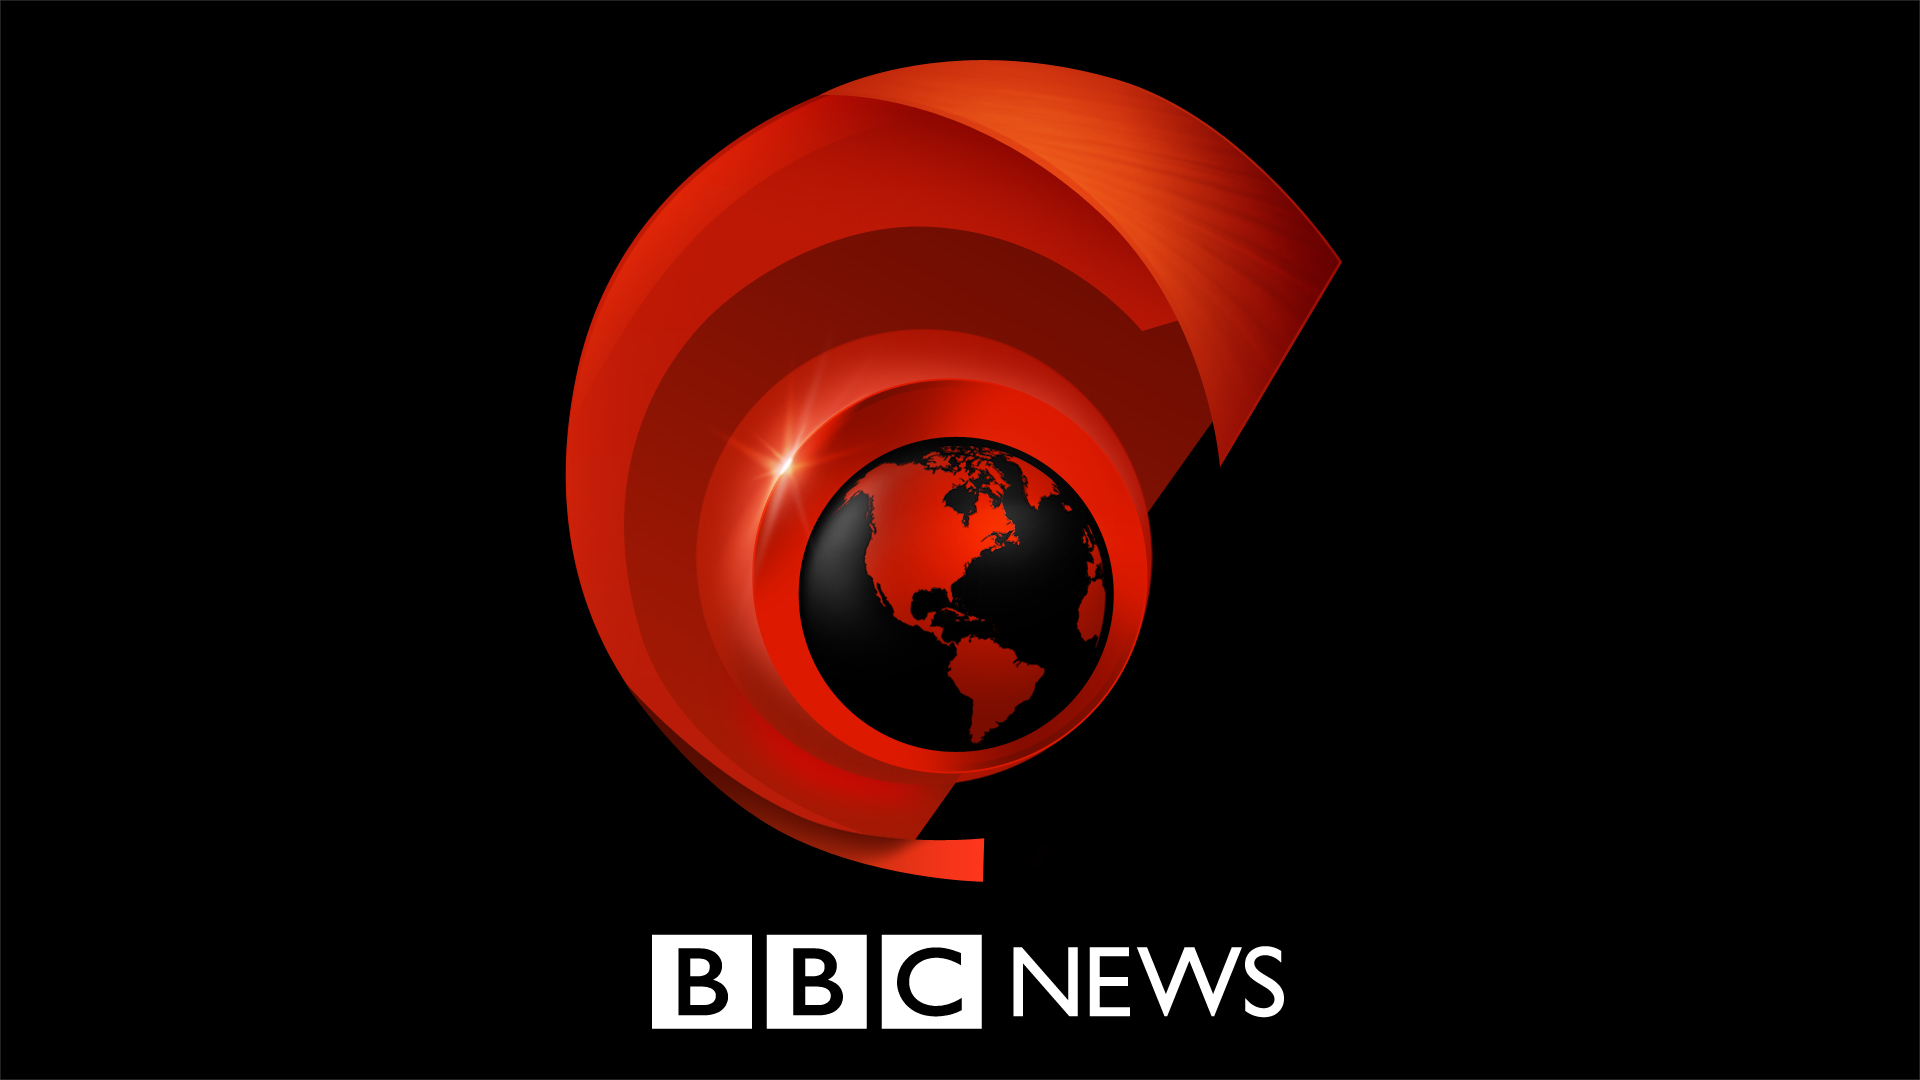 BBC News logo recreation